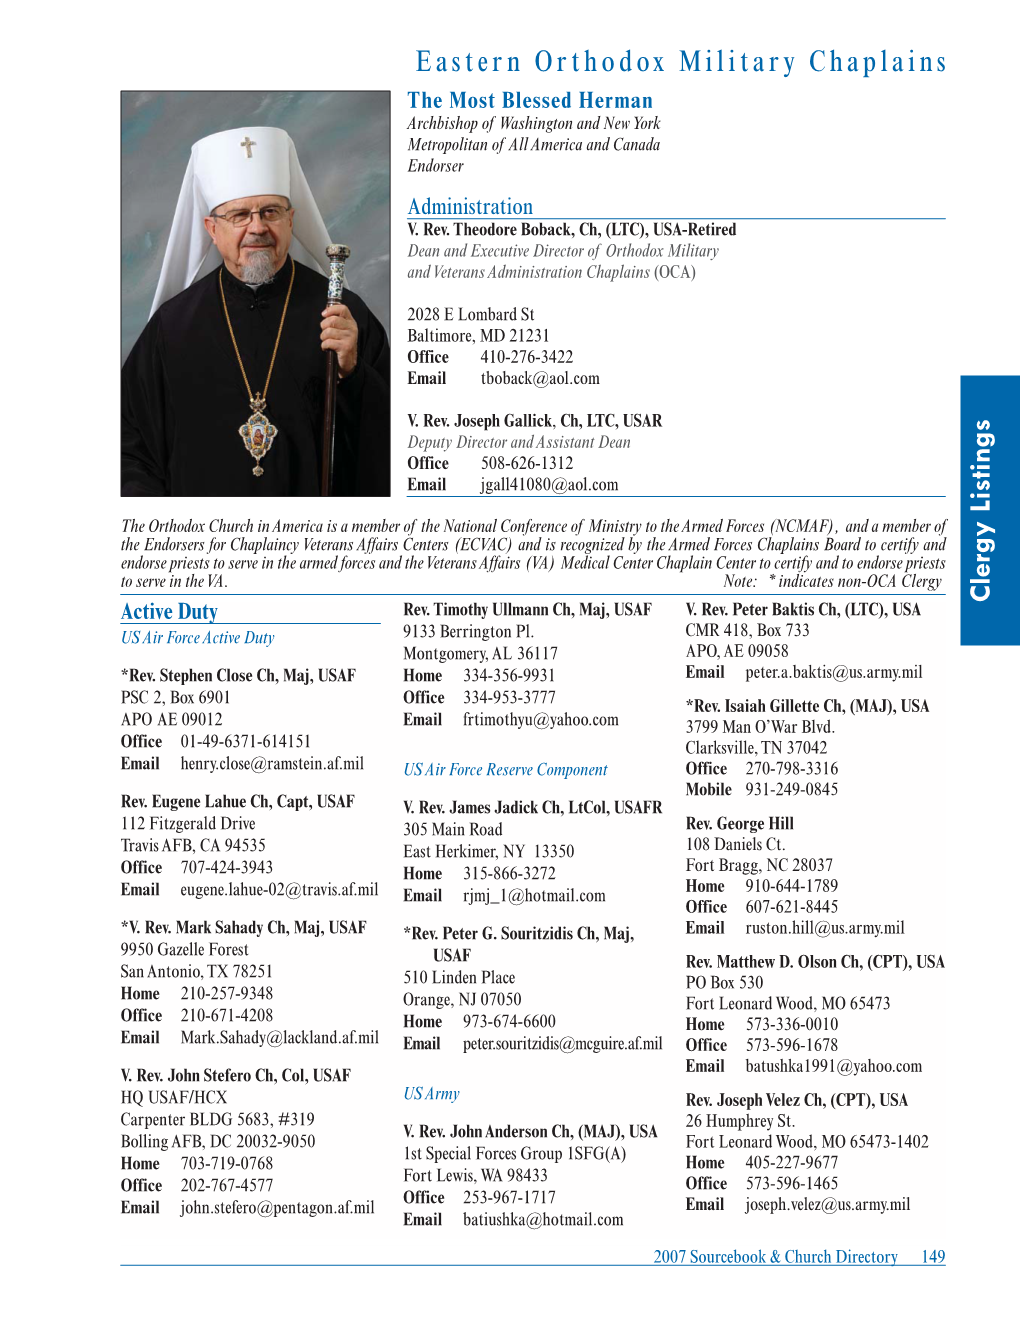 Eastern Orthodox Military Chaplains Clergy Listings